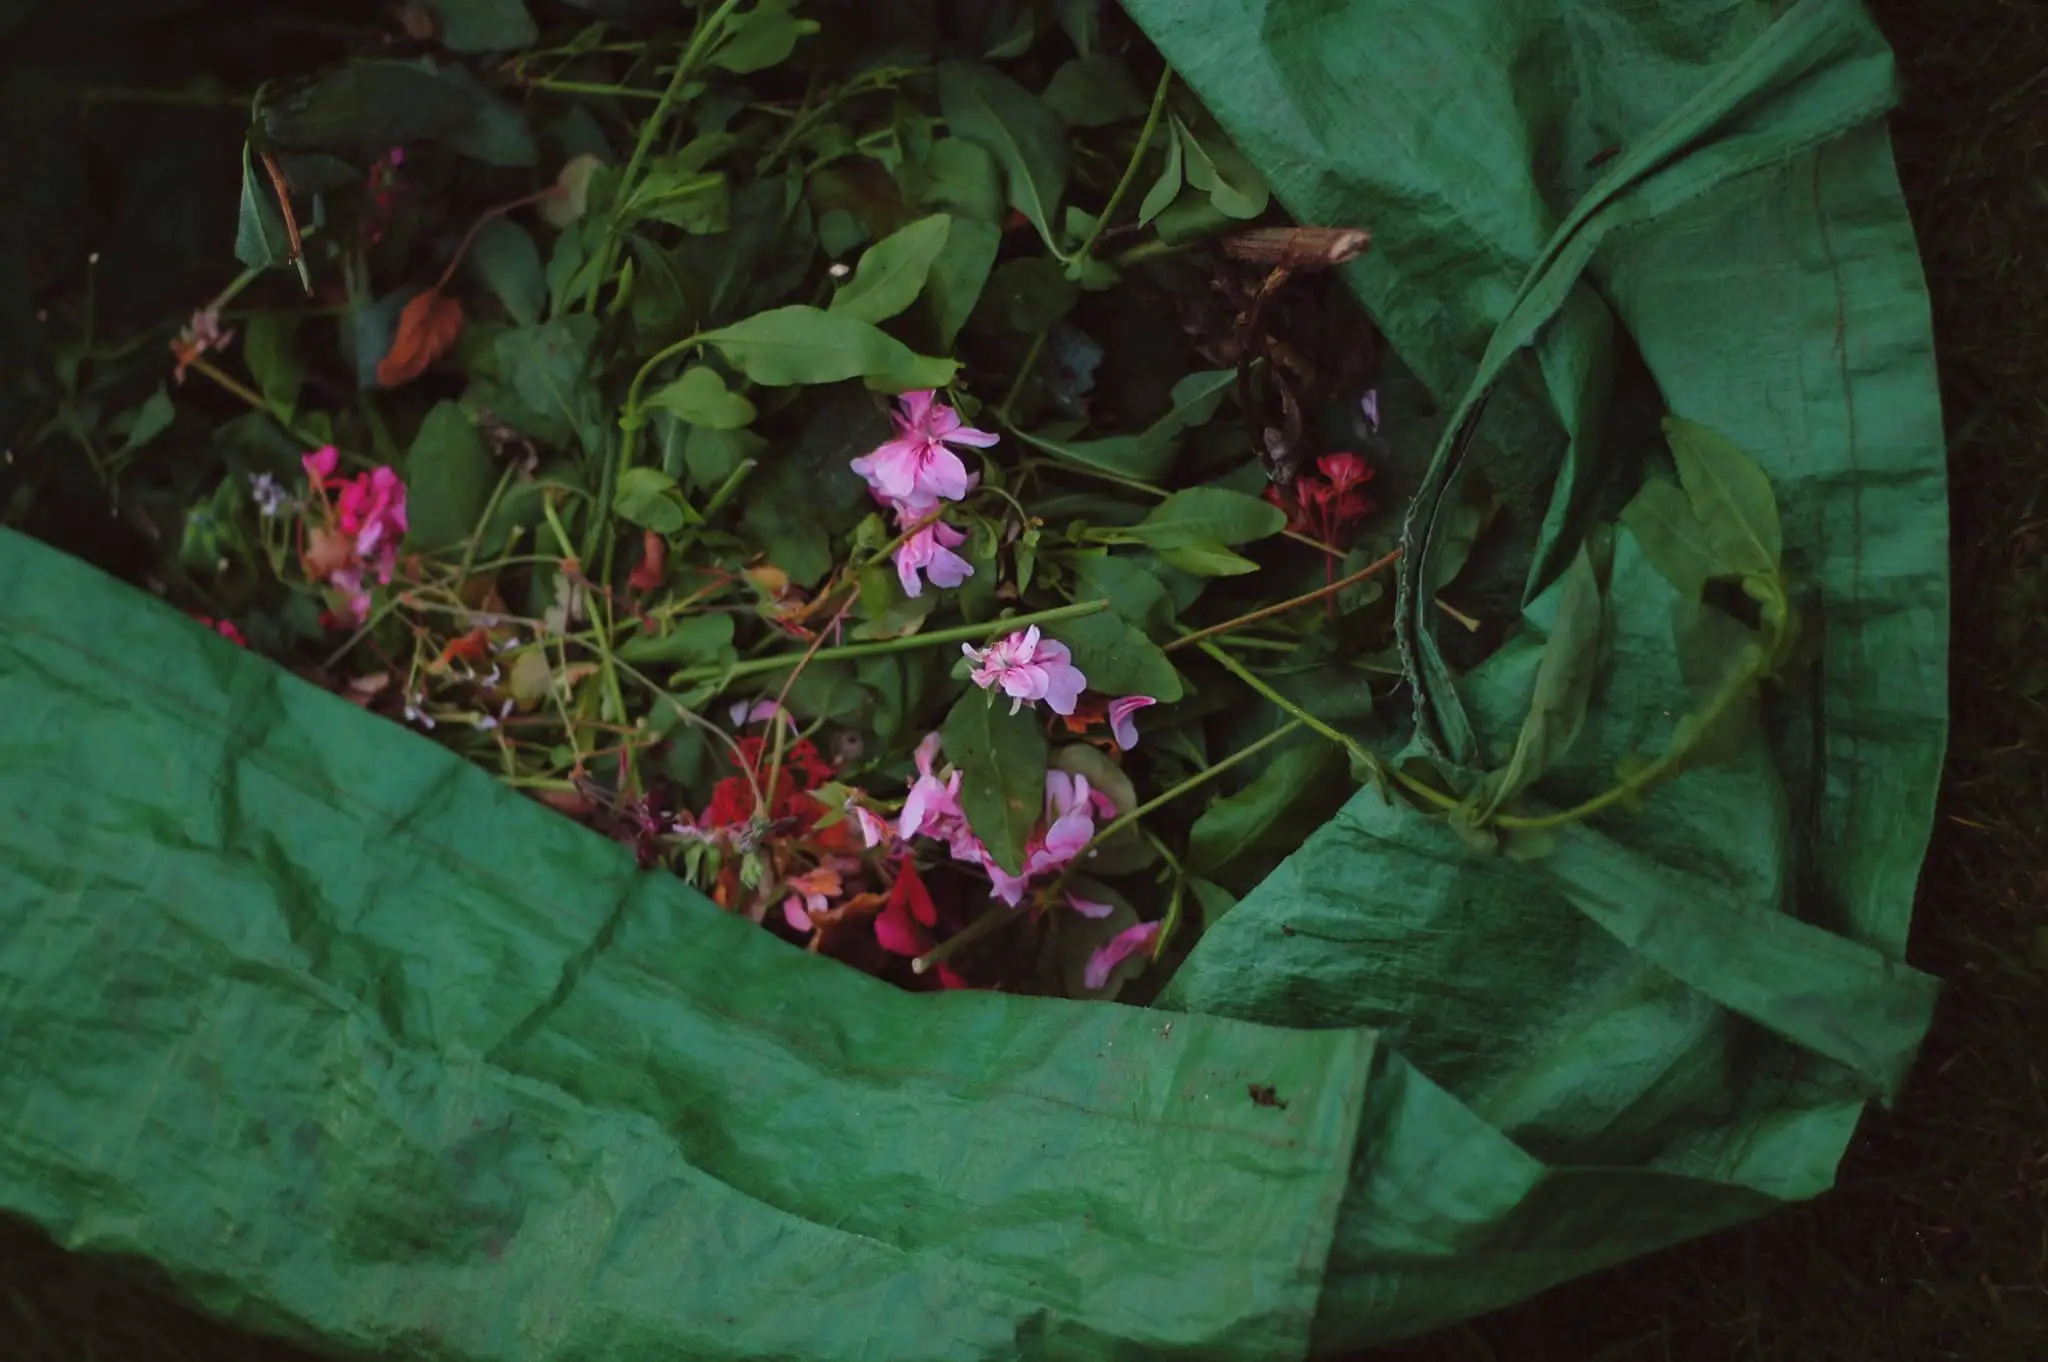 Garden waste in a green bag